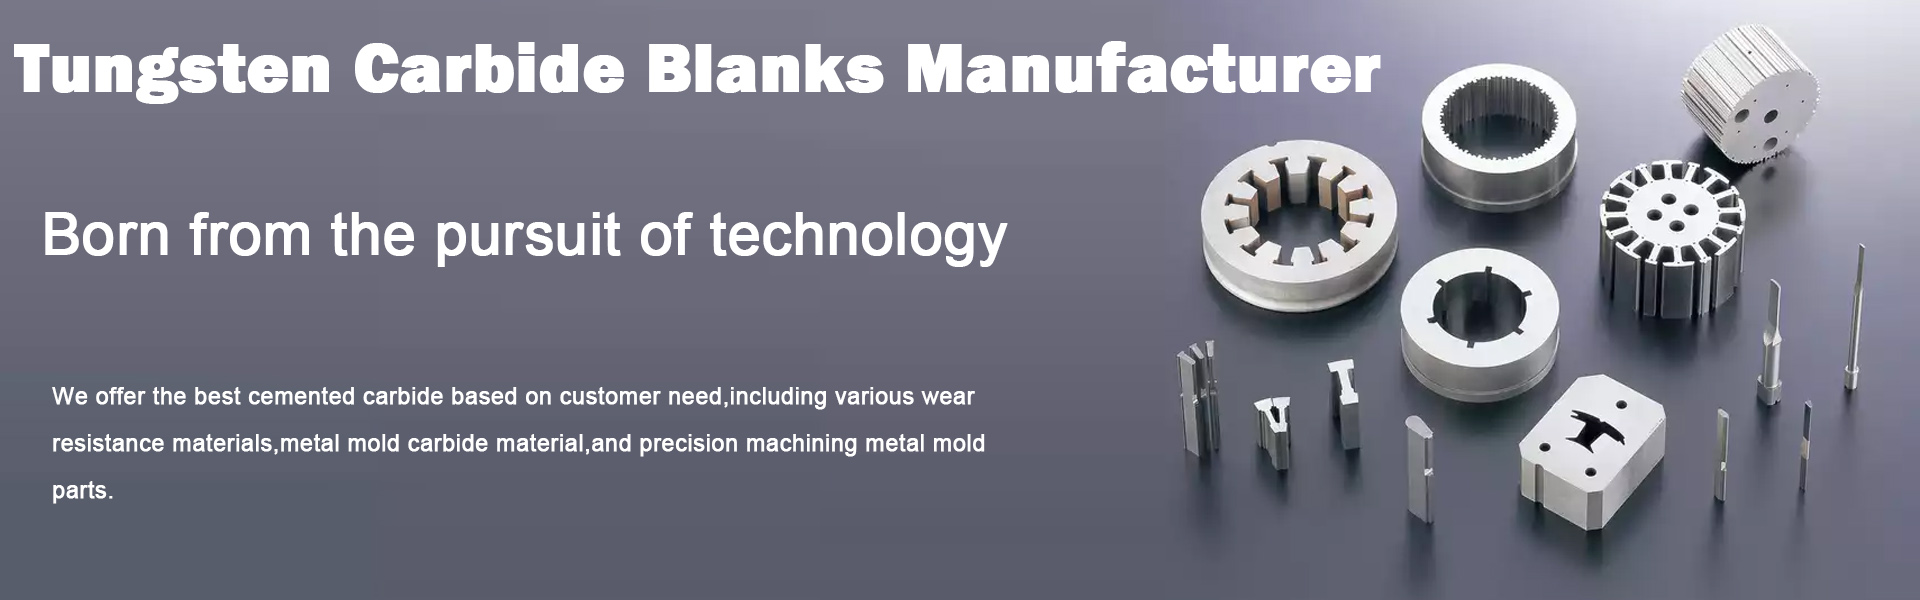 金属および合金、特殊金属材料、中国の金属鋼供給,MiXiao Tech